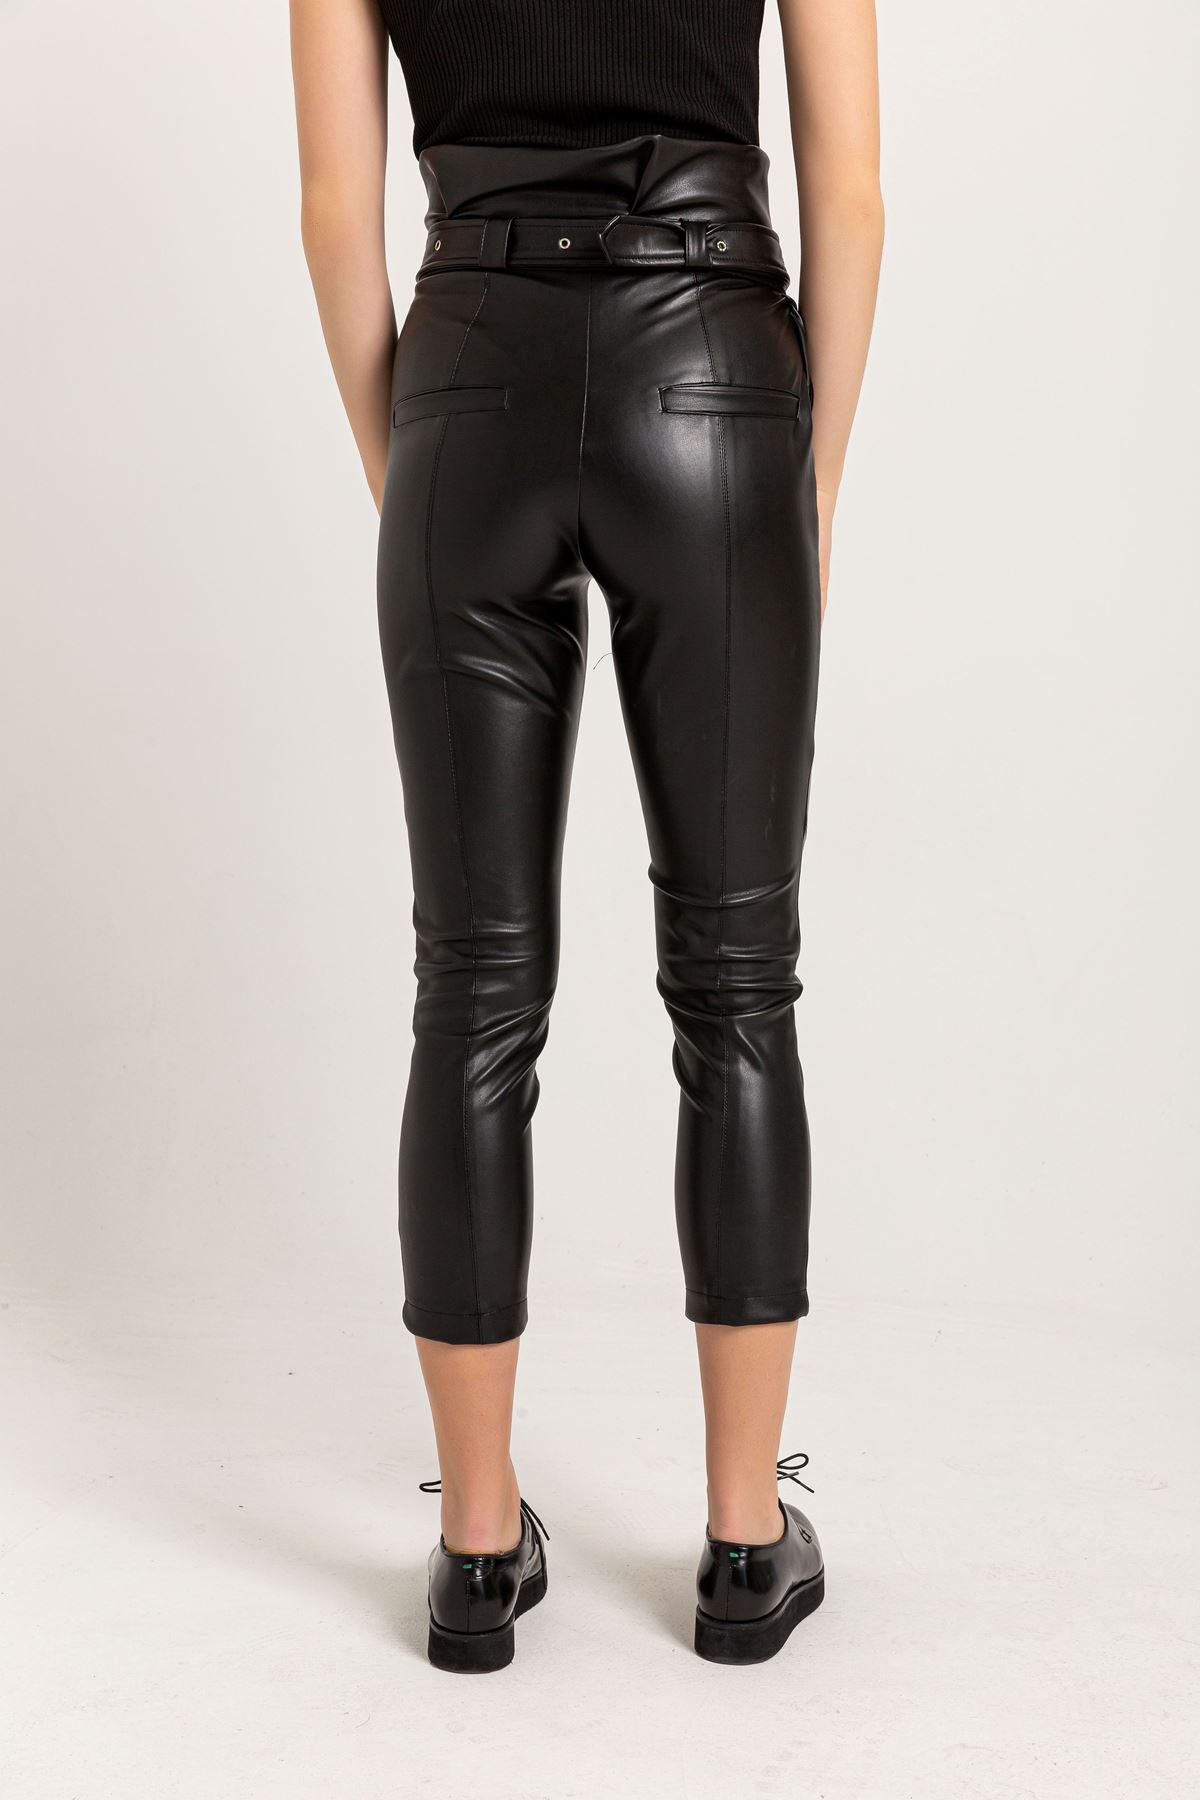 Leather Fabric Long Tigth Fit High Waist Belt Women'S Trouser - Black